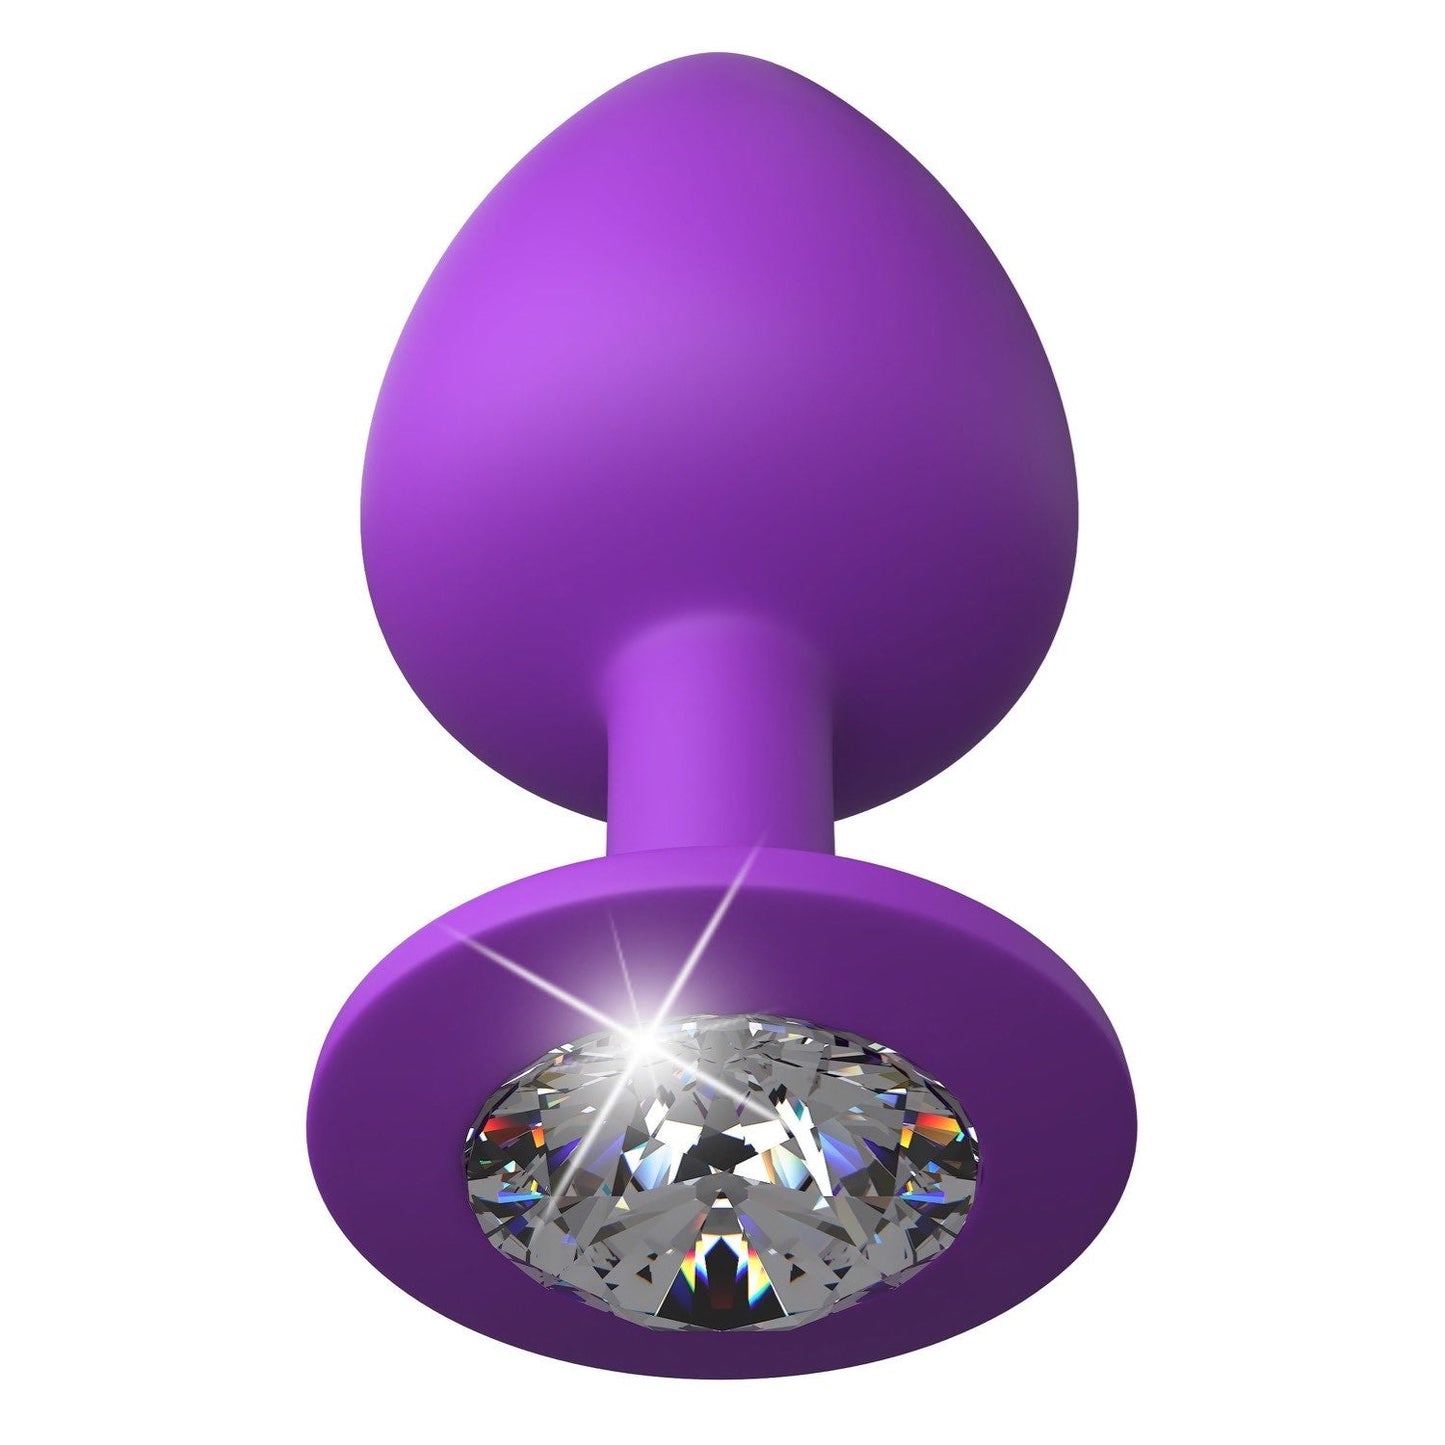 Little Gem 大插头 - 紫色 9.6 厘米对接插头，带宝石底座